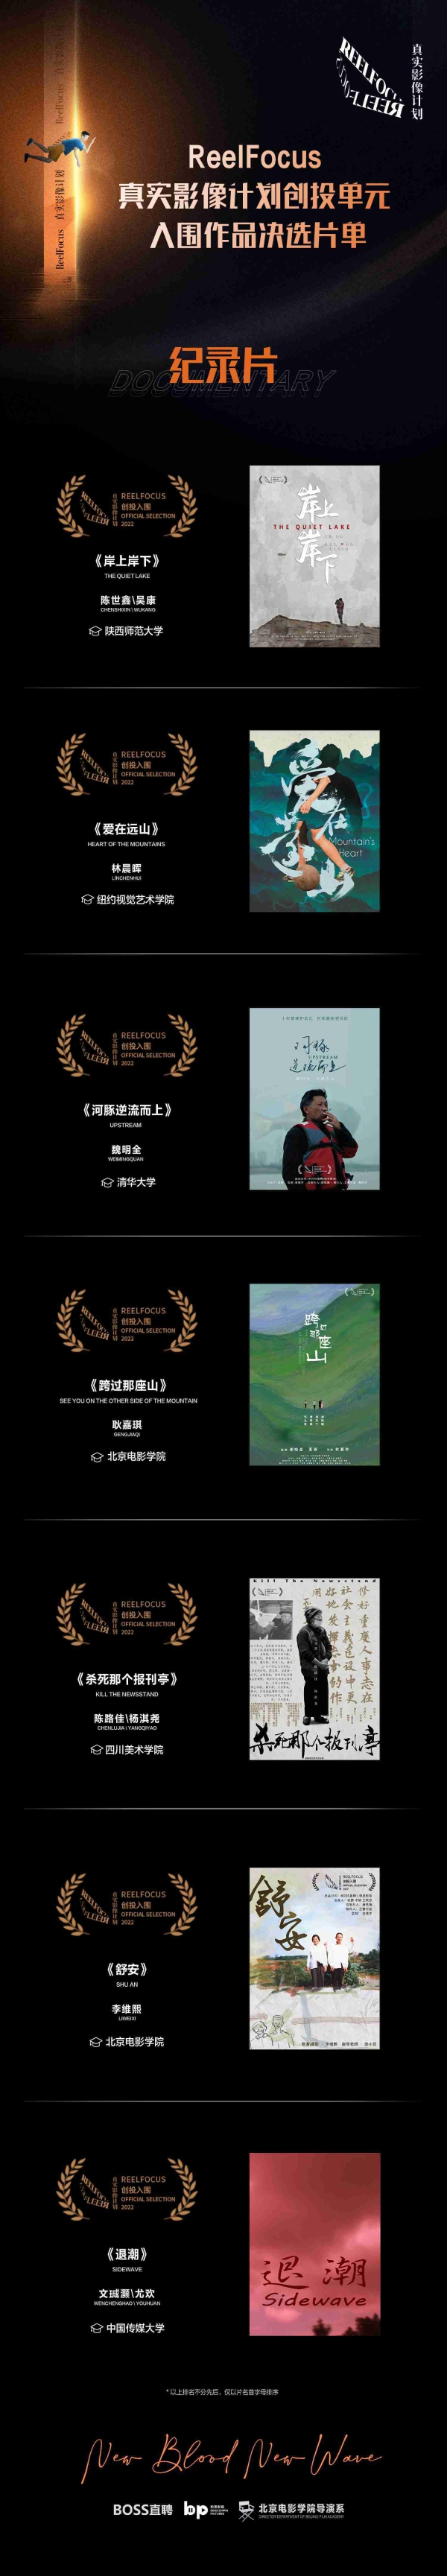 ReelFocus真实影像计划加盟北京国际电影节，BOSS直聘助力大学生职业之路 